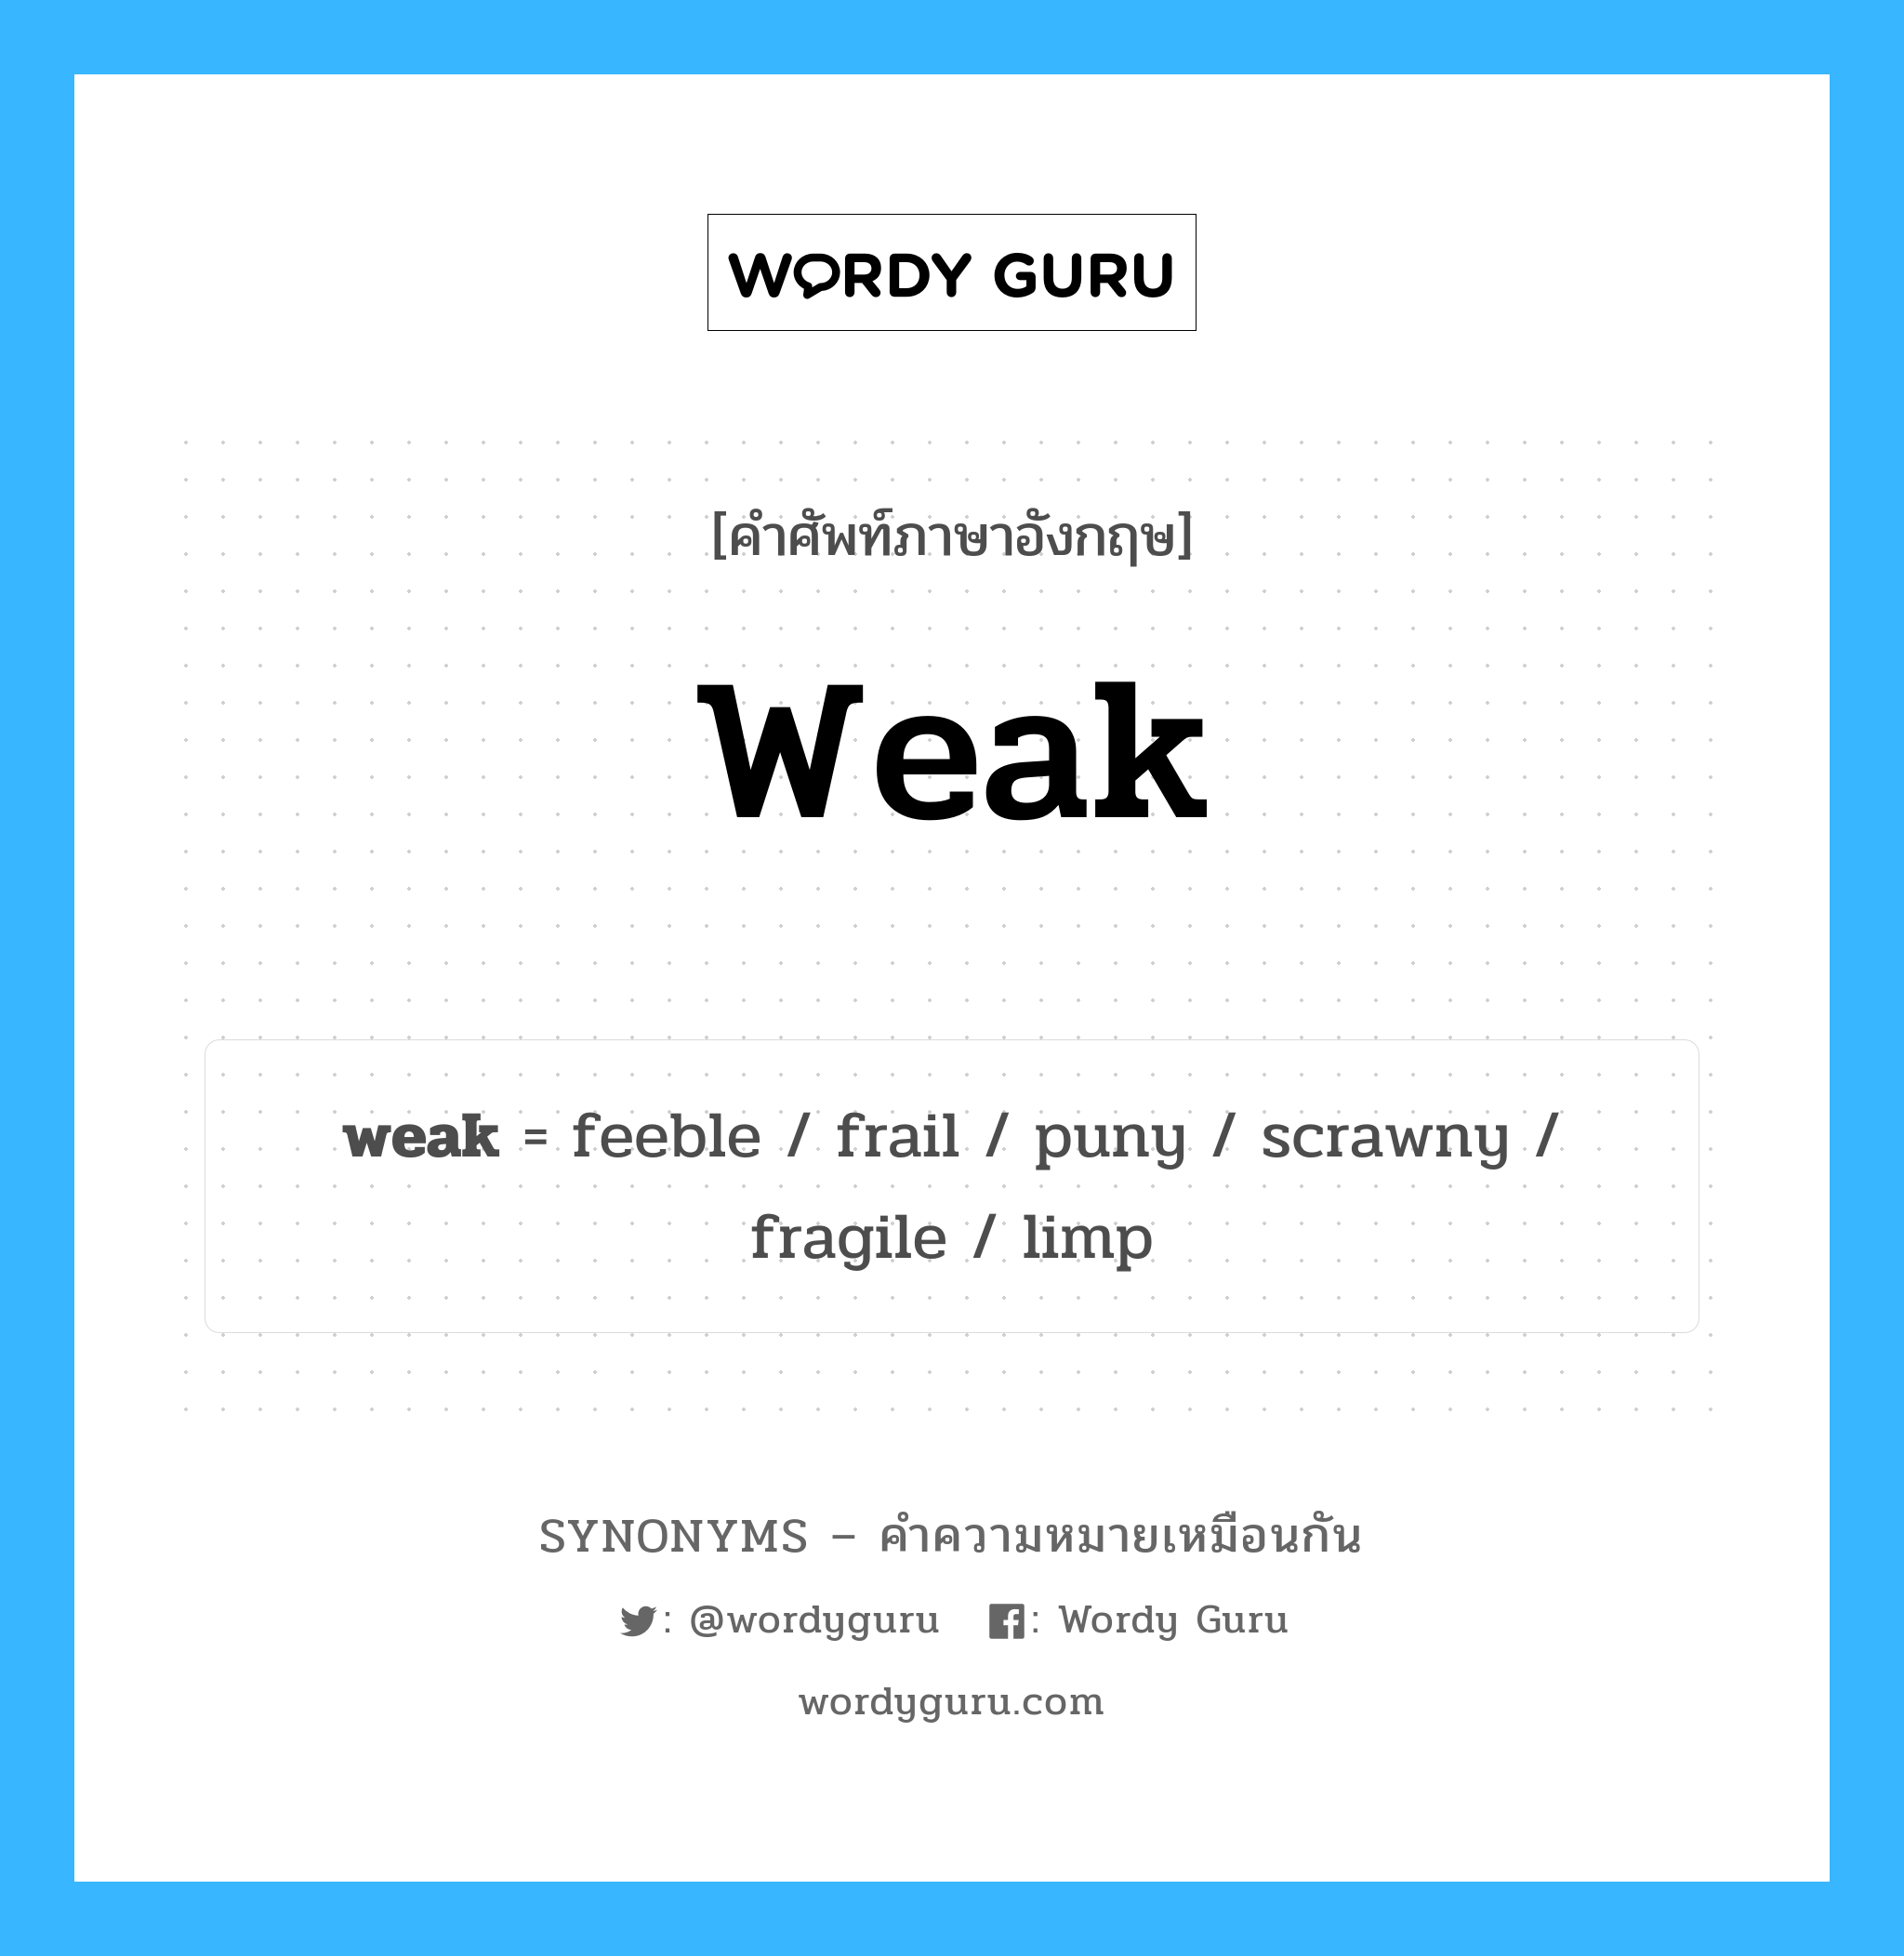 limp เป็นหนึ่งใน weak และมีคำอื่น ๆ อีกดังนี้, คำศัพท์ภาษาอังกฤษ limp ความหมายคล้ายกันกับ weak แปลว่า ลีบ หมวด weak